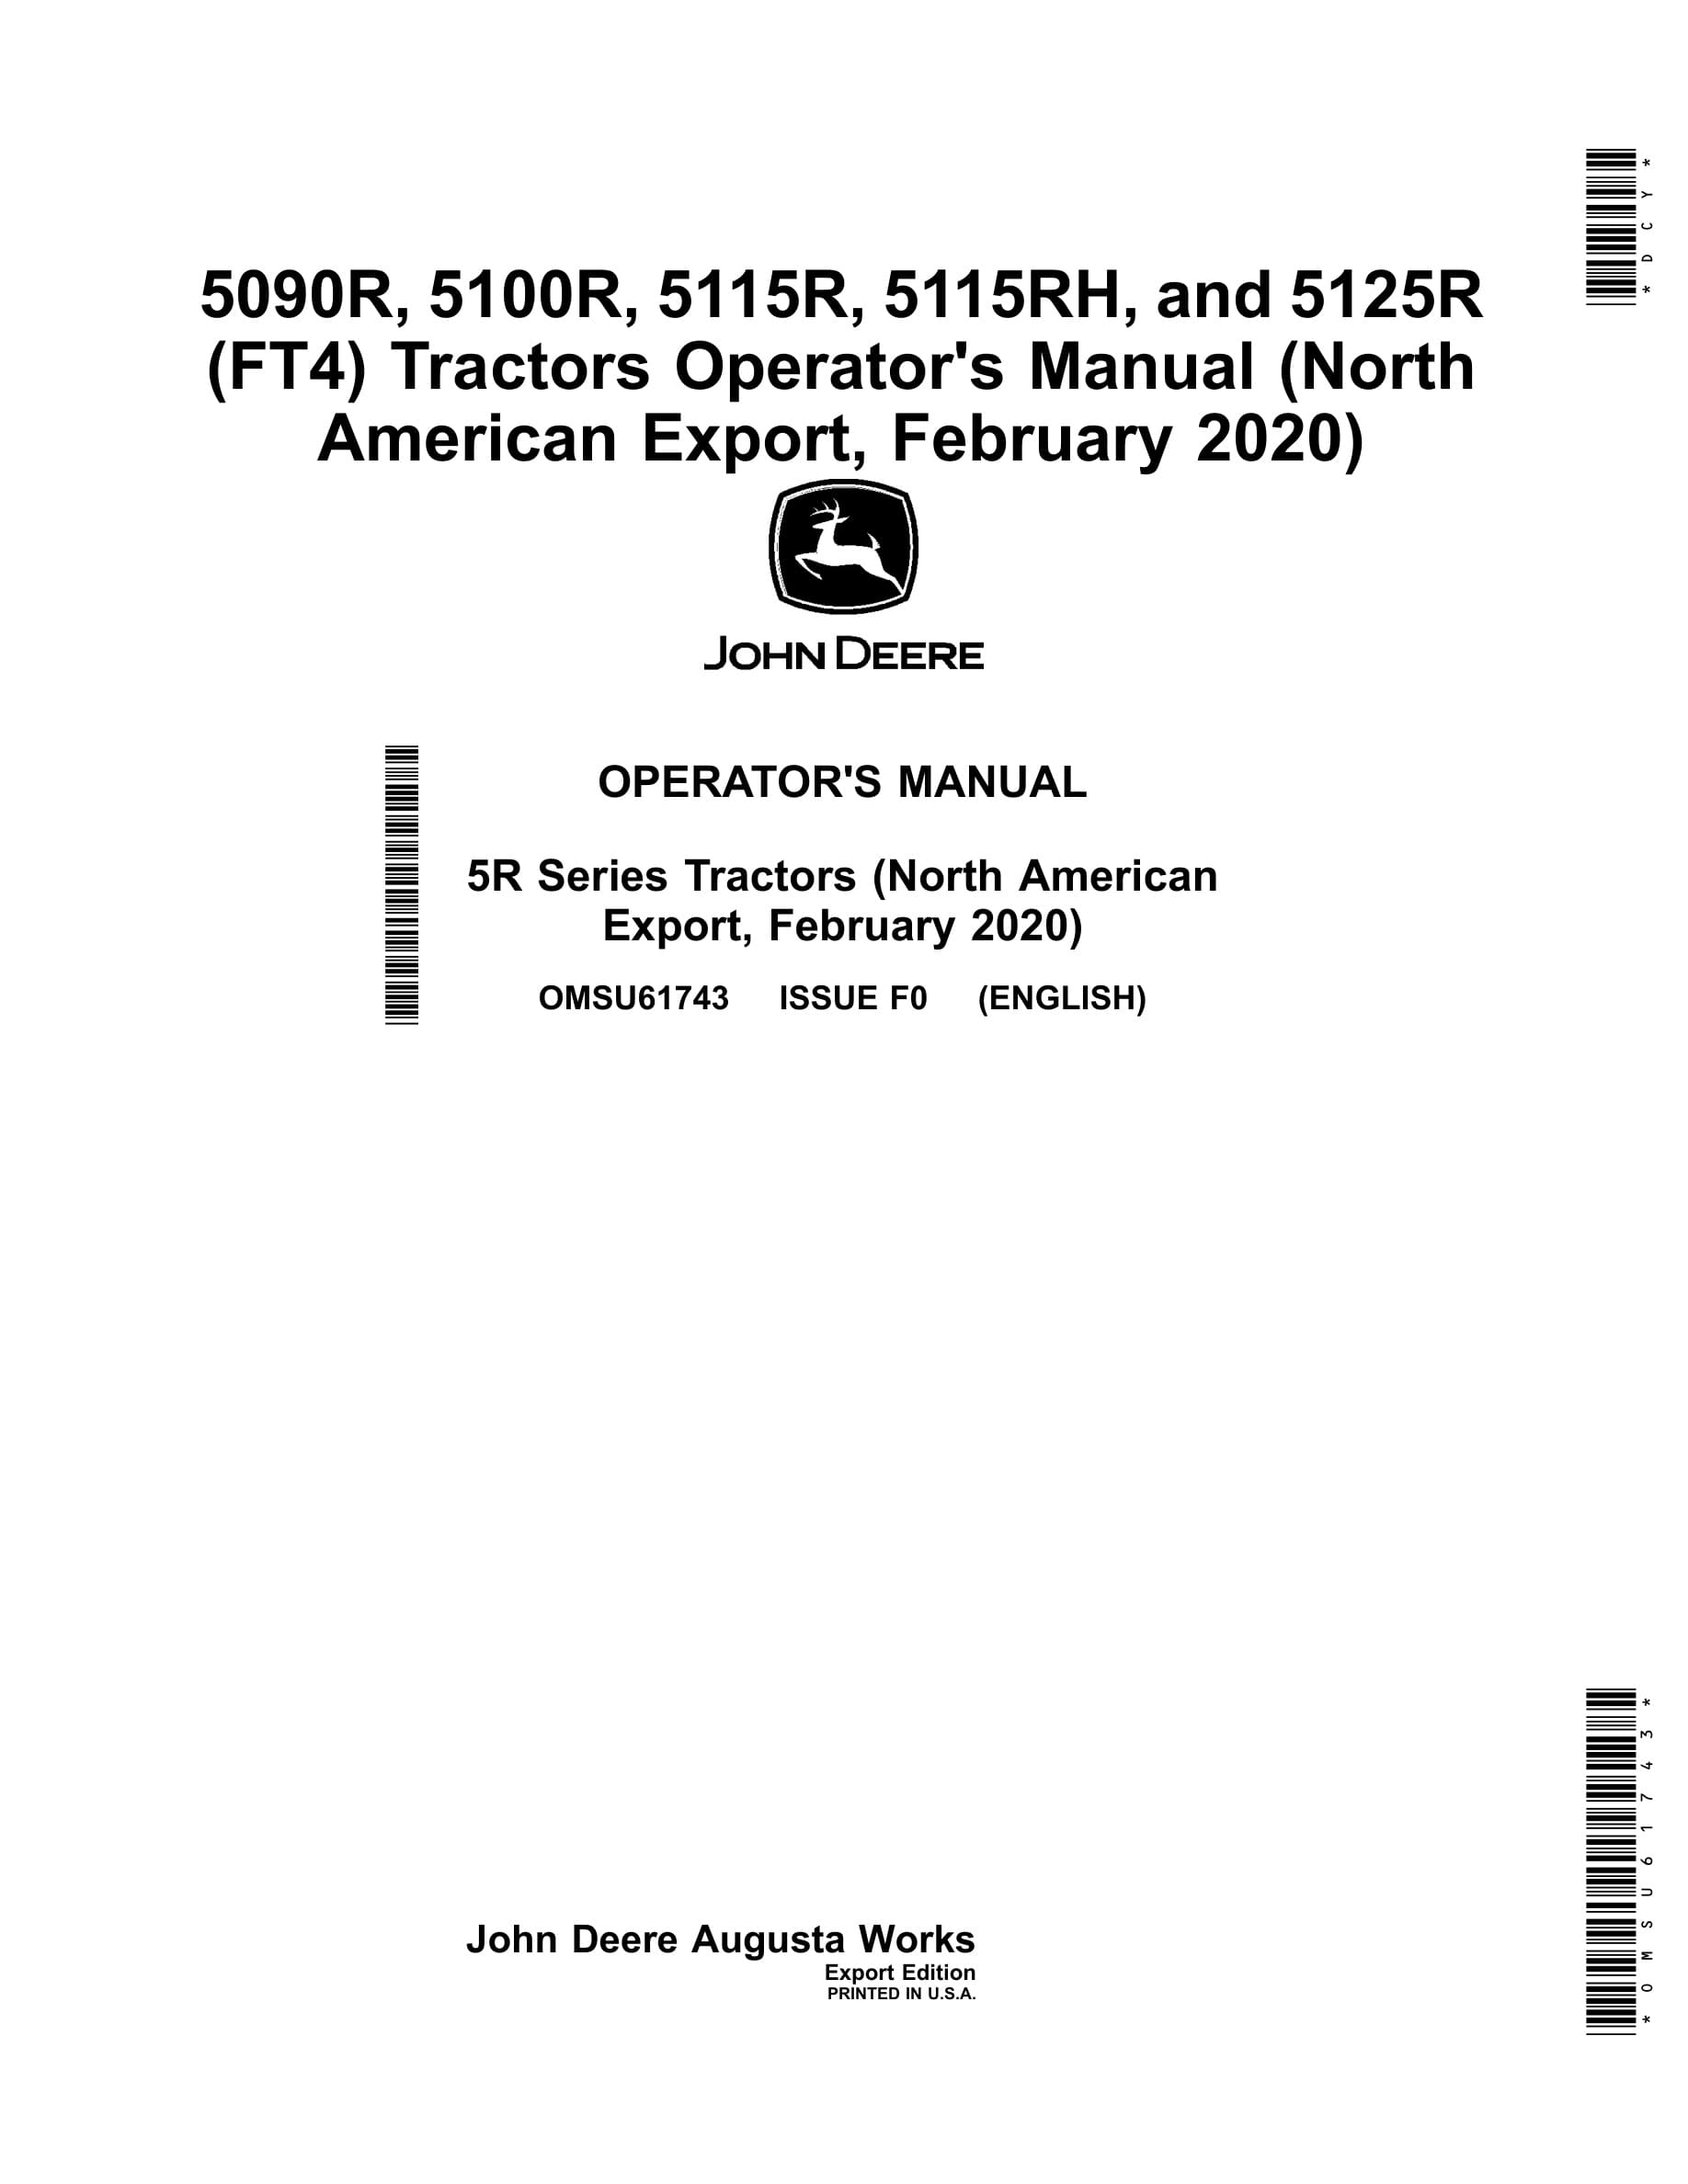 John Deere 5090r, 5100r, 5115r, 5115rh, And 5125r (ft4) Tractors Operator Manuals OMSU61743-1